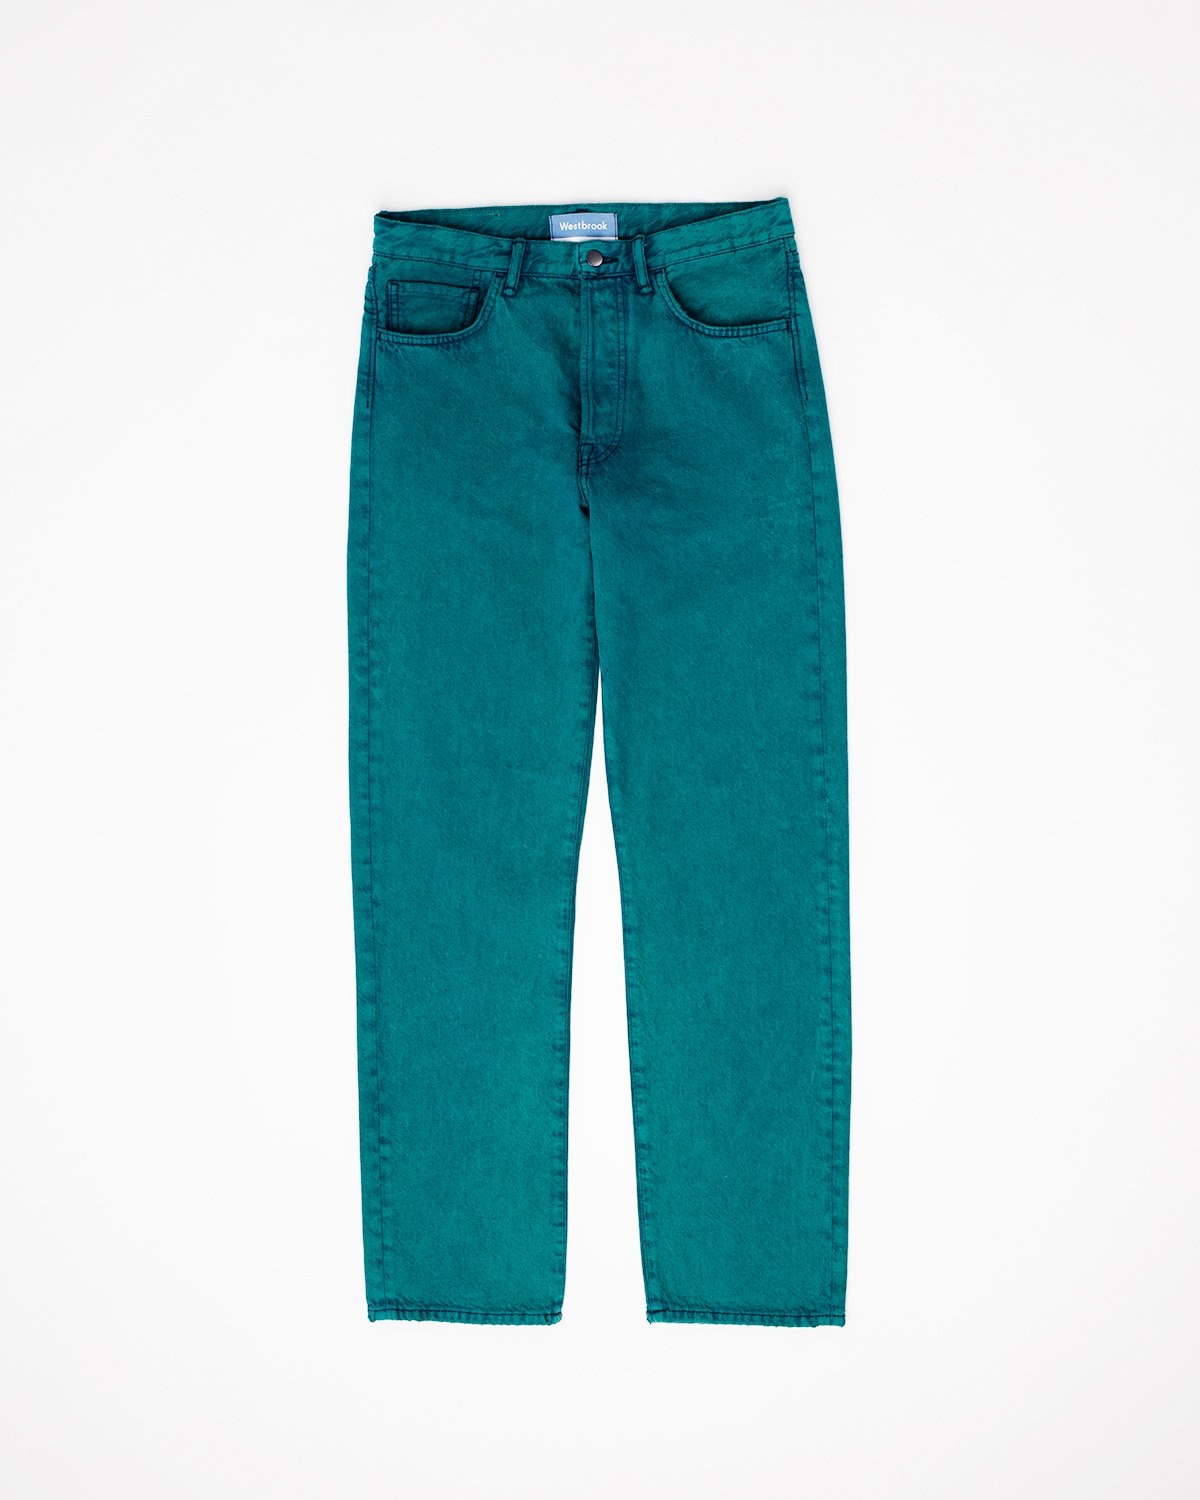 Acne Studios – Overdyed Jeans Jade Green - Denim - Green - Image 1